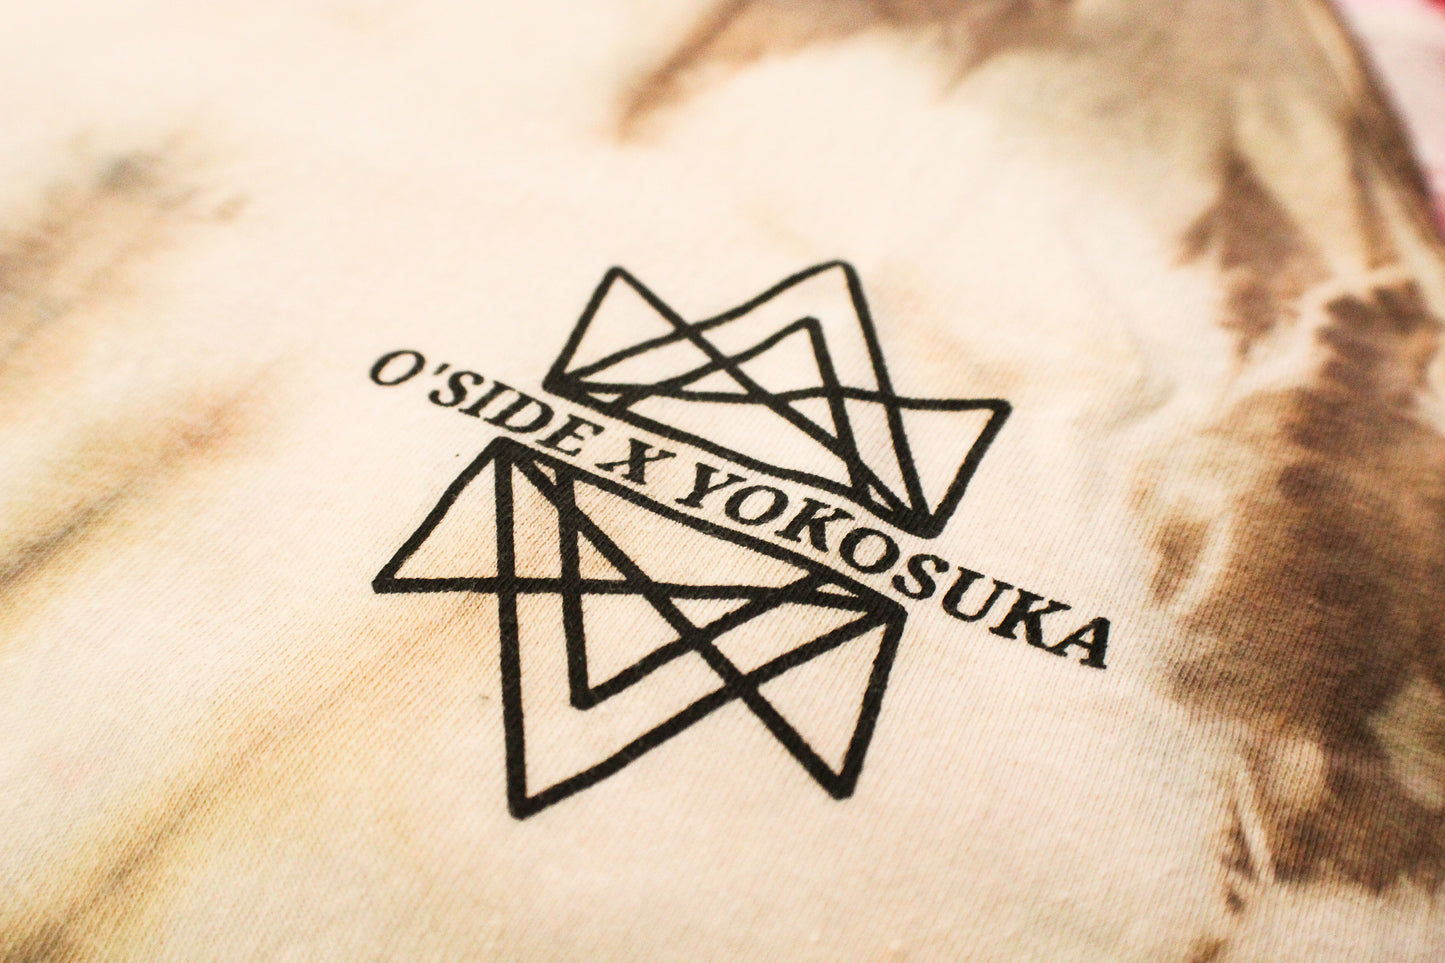 Limited O'side x Yokosuka Shibori Dye Men's Tank top - Medium